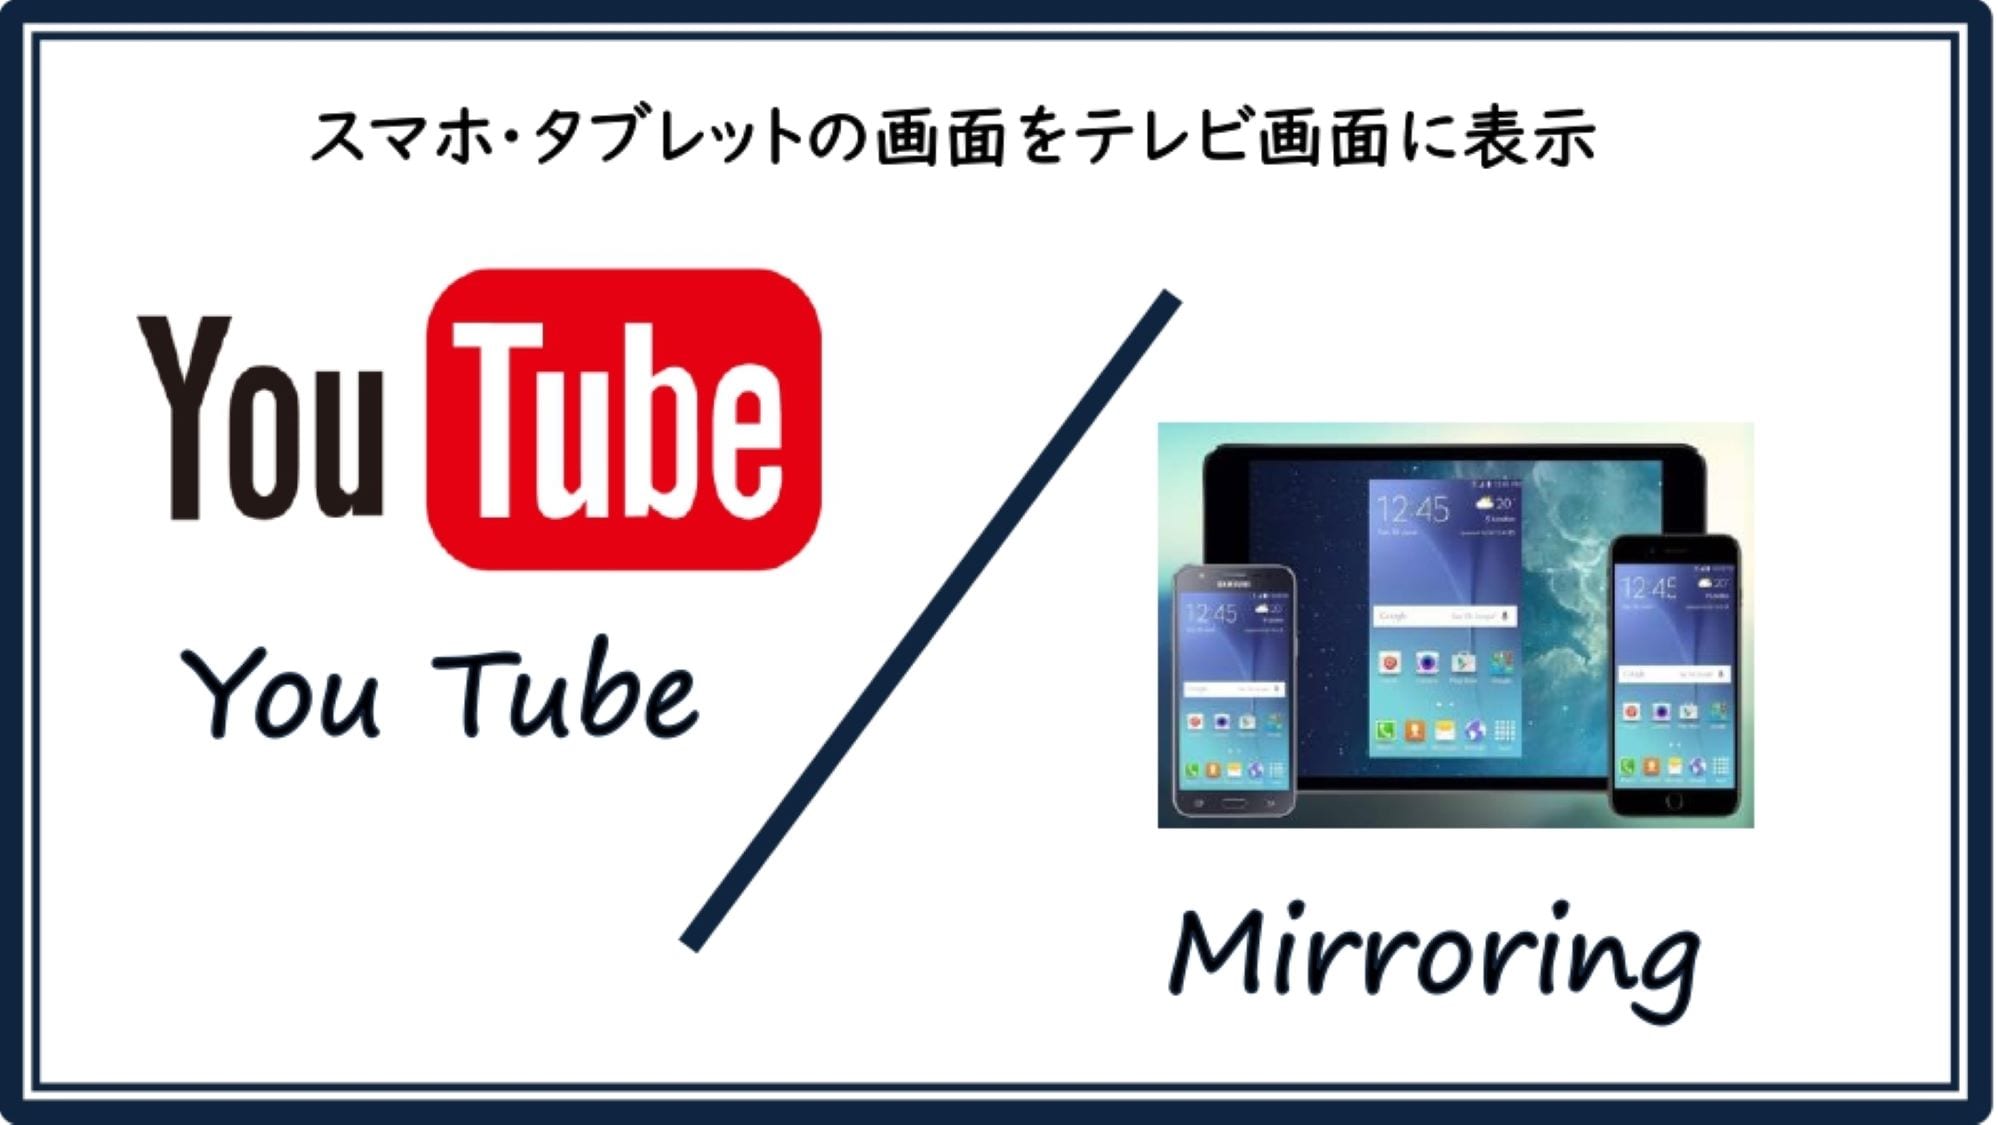 YouTube & Mirroring